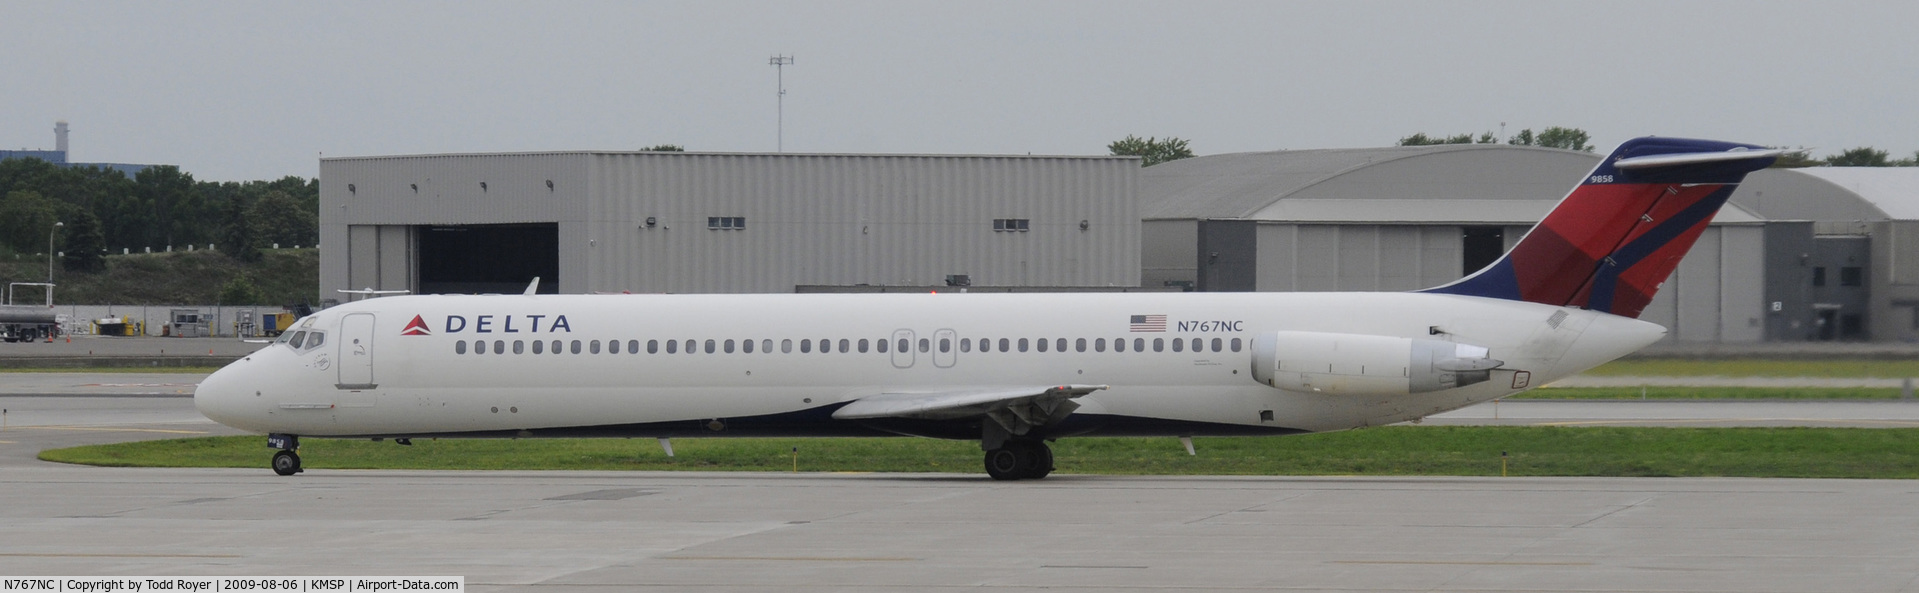 N767NC, 1977 McDonnell Douglas DC-9-51 C/N 47724, Taxi for departure